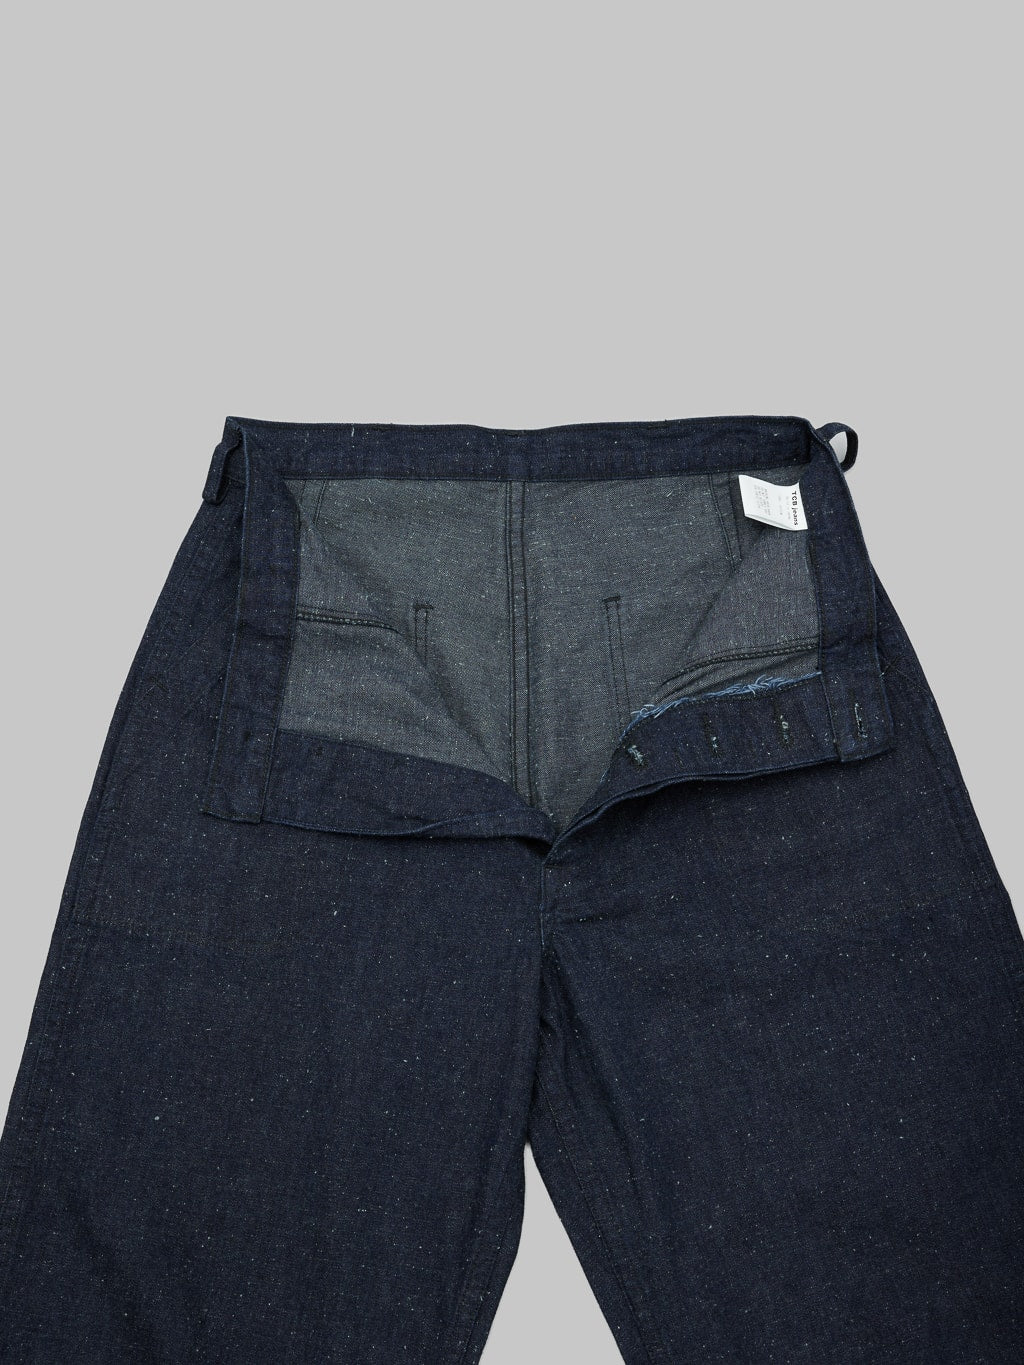 tcb jeans usn seamens denim trousers  fabric interior